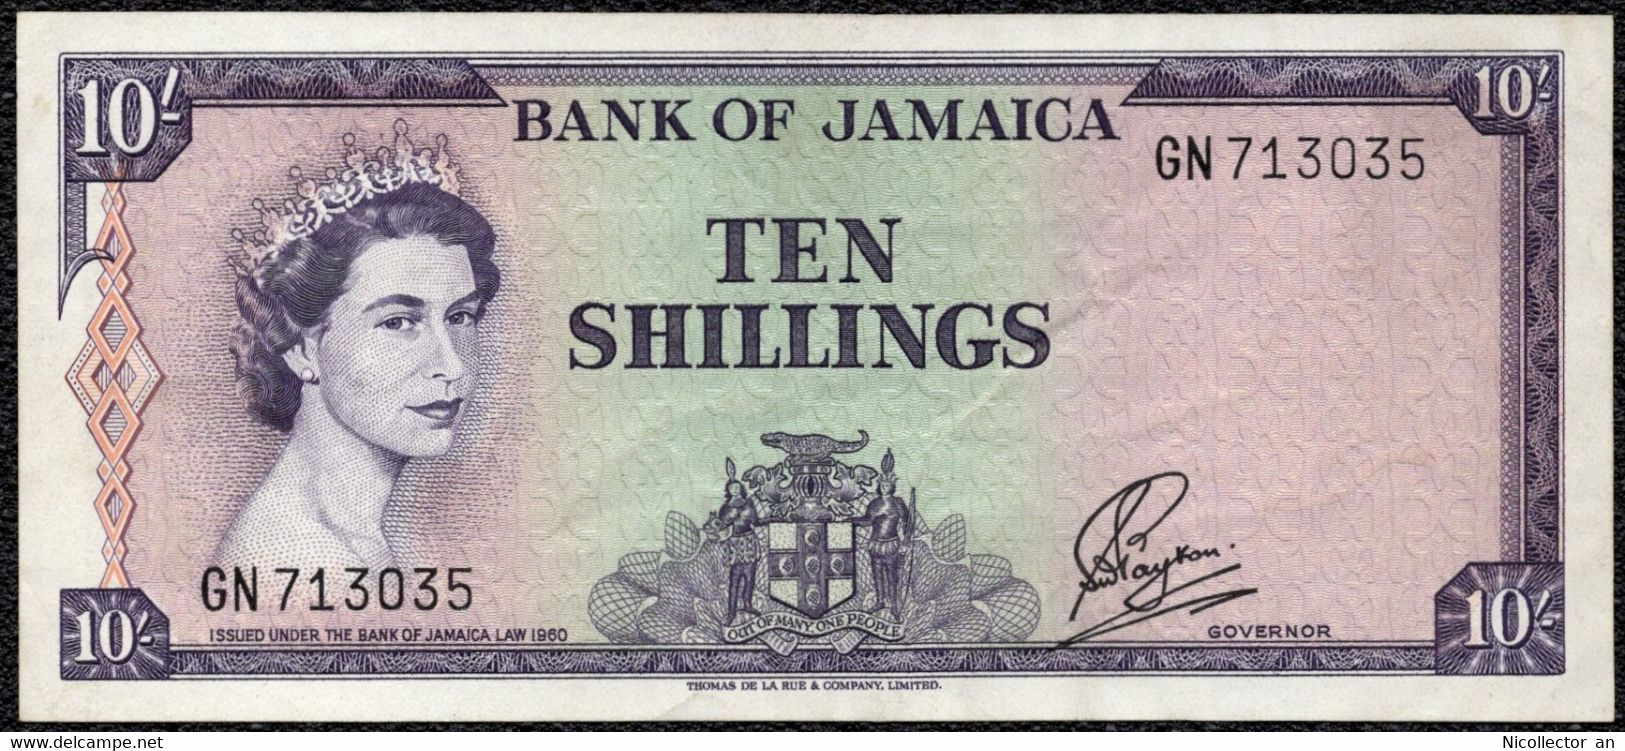 Jamaica 10 Shillings 1960 XF QEII Rare Banknote - Giamaica